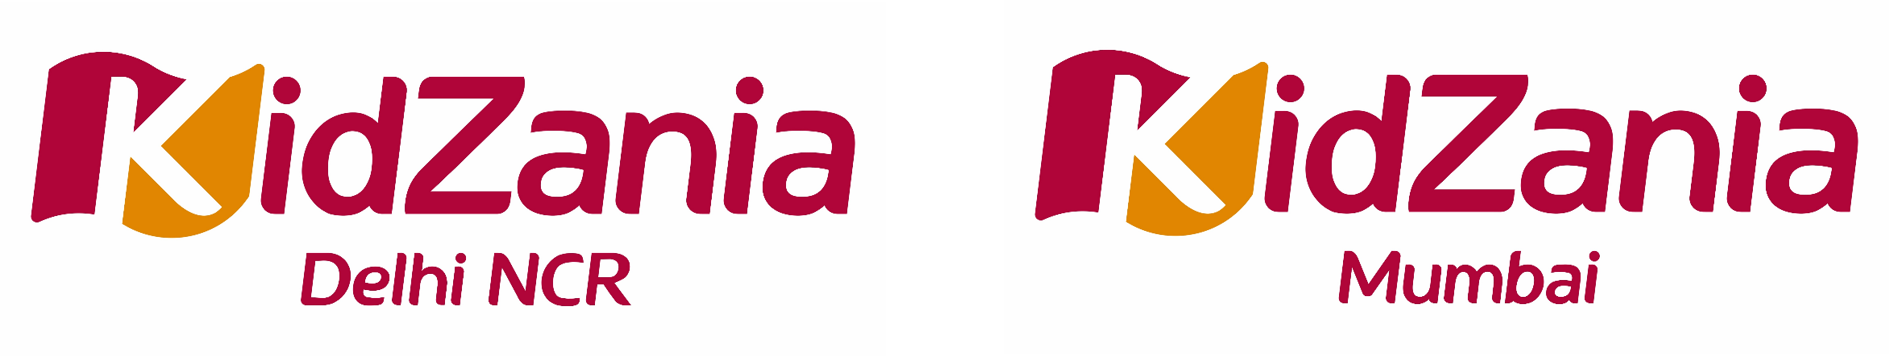 KidZania Mumbai & Delhi NCR Logo